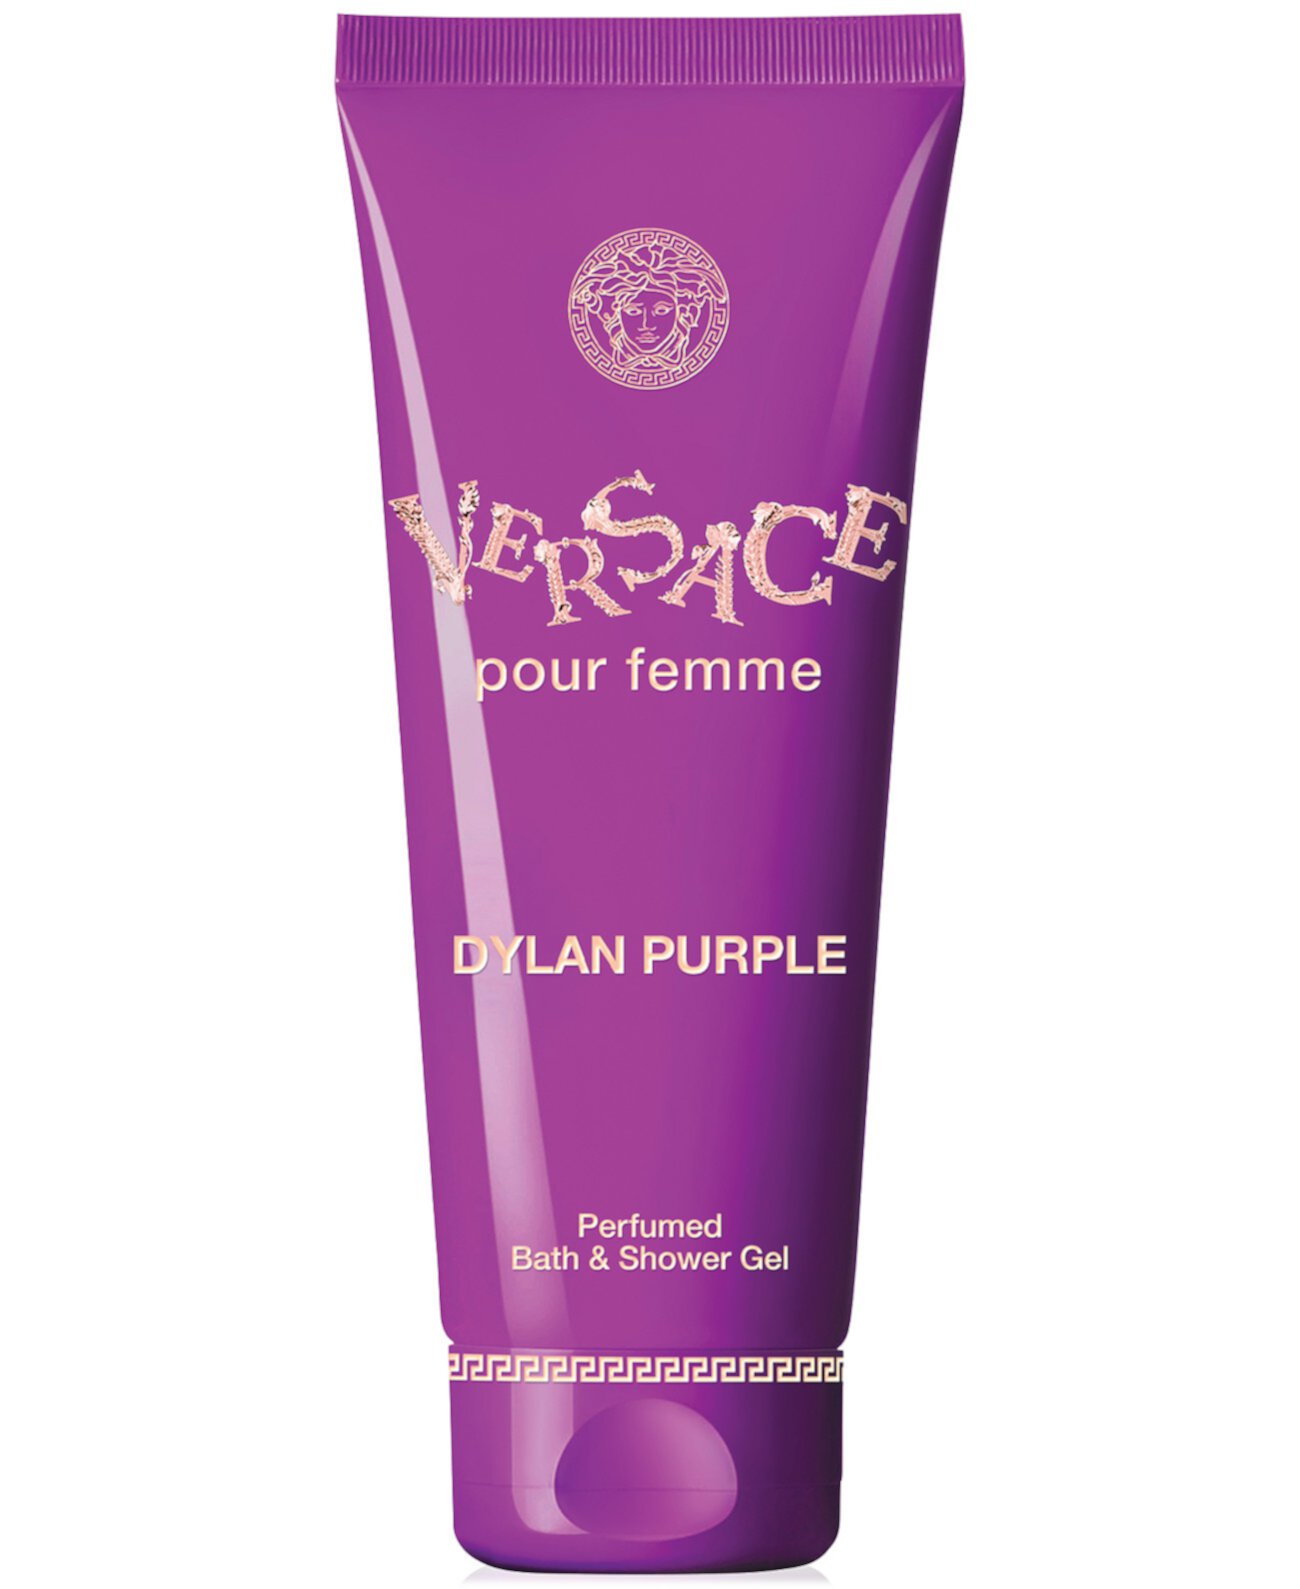 Dylan Purple Perfumed Bath & Shower Gel, 6.7 oz. Versace